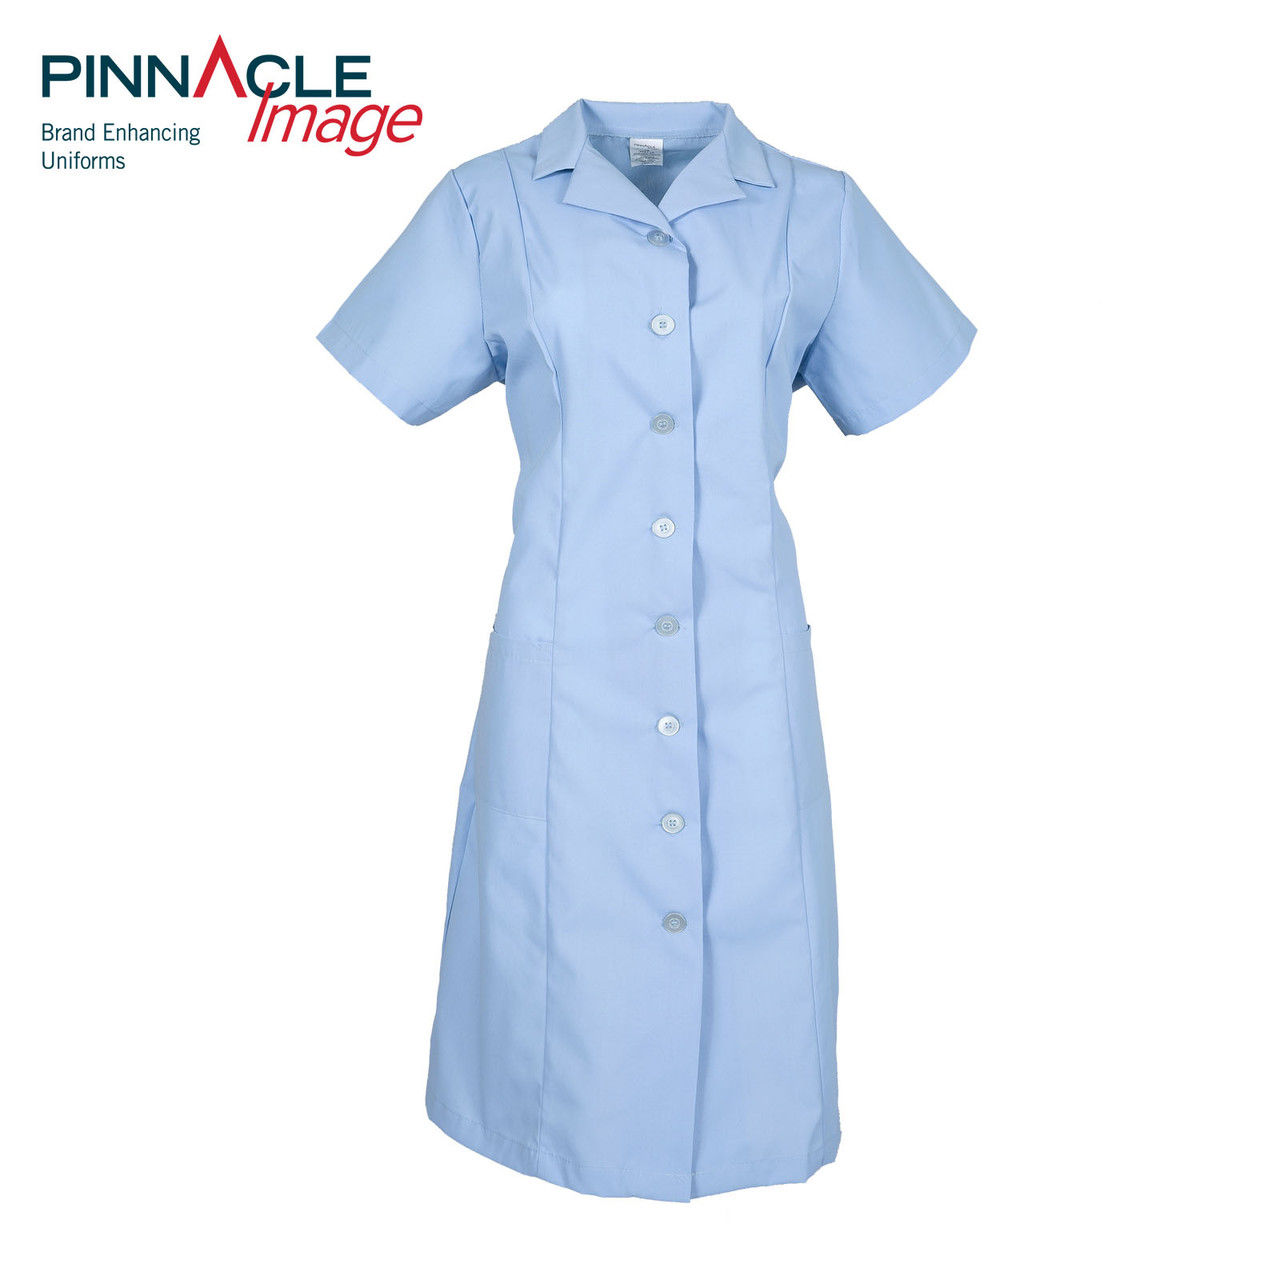 How does the blue uniform dress fit?